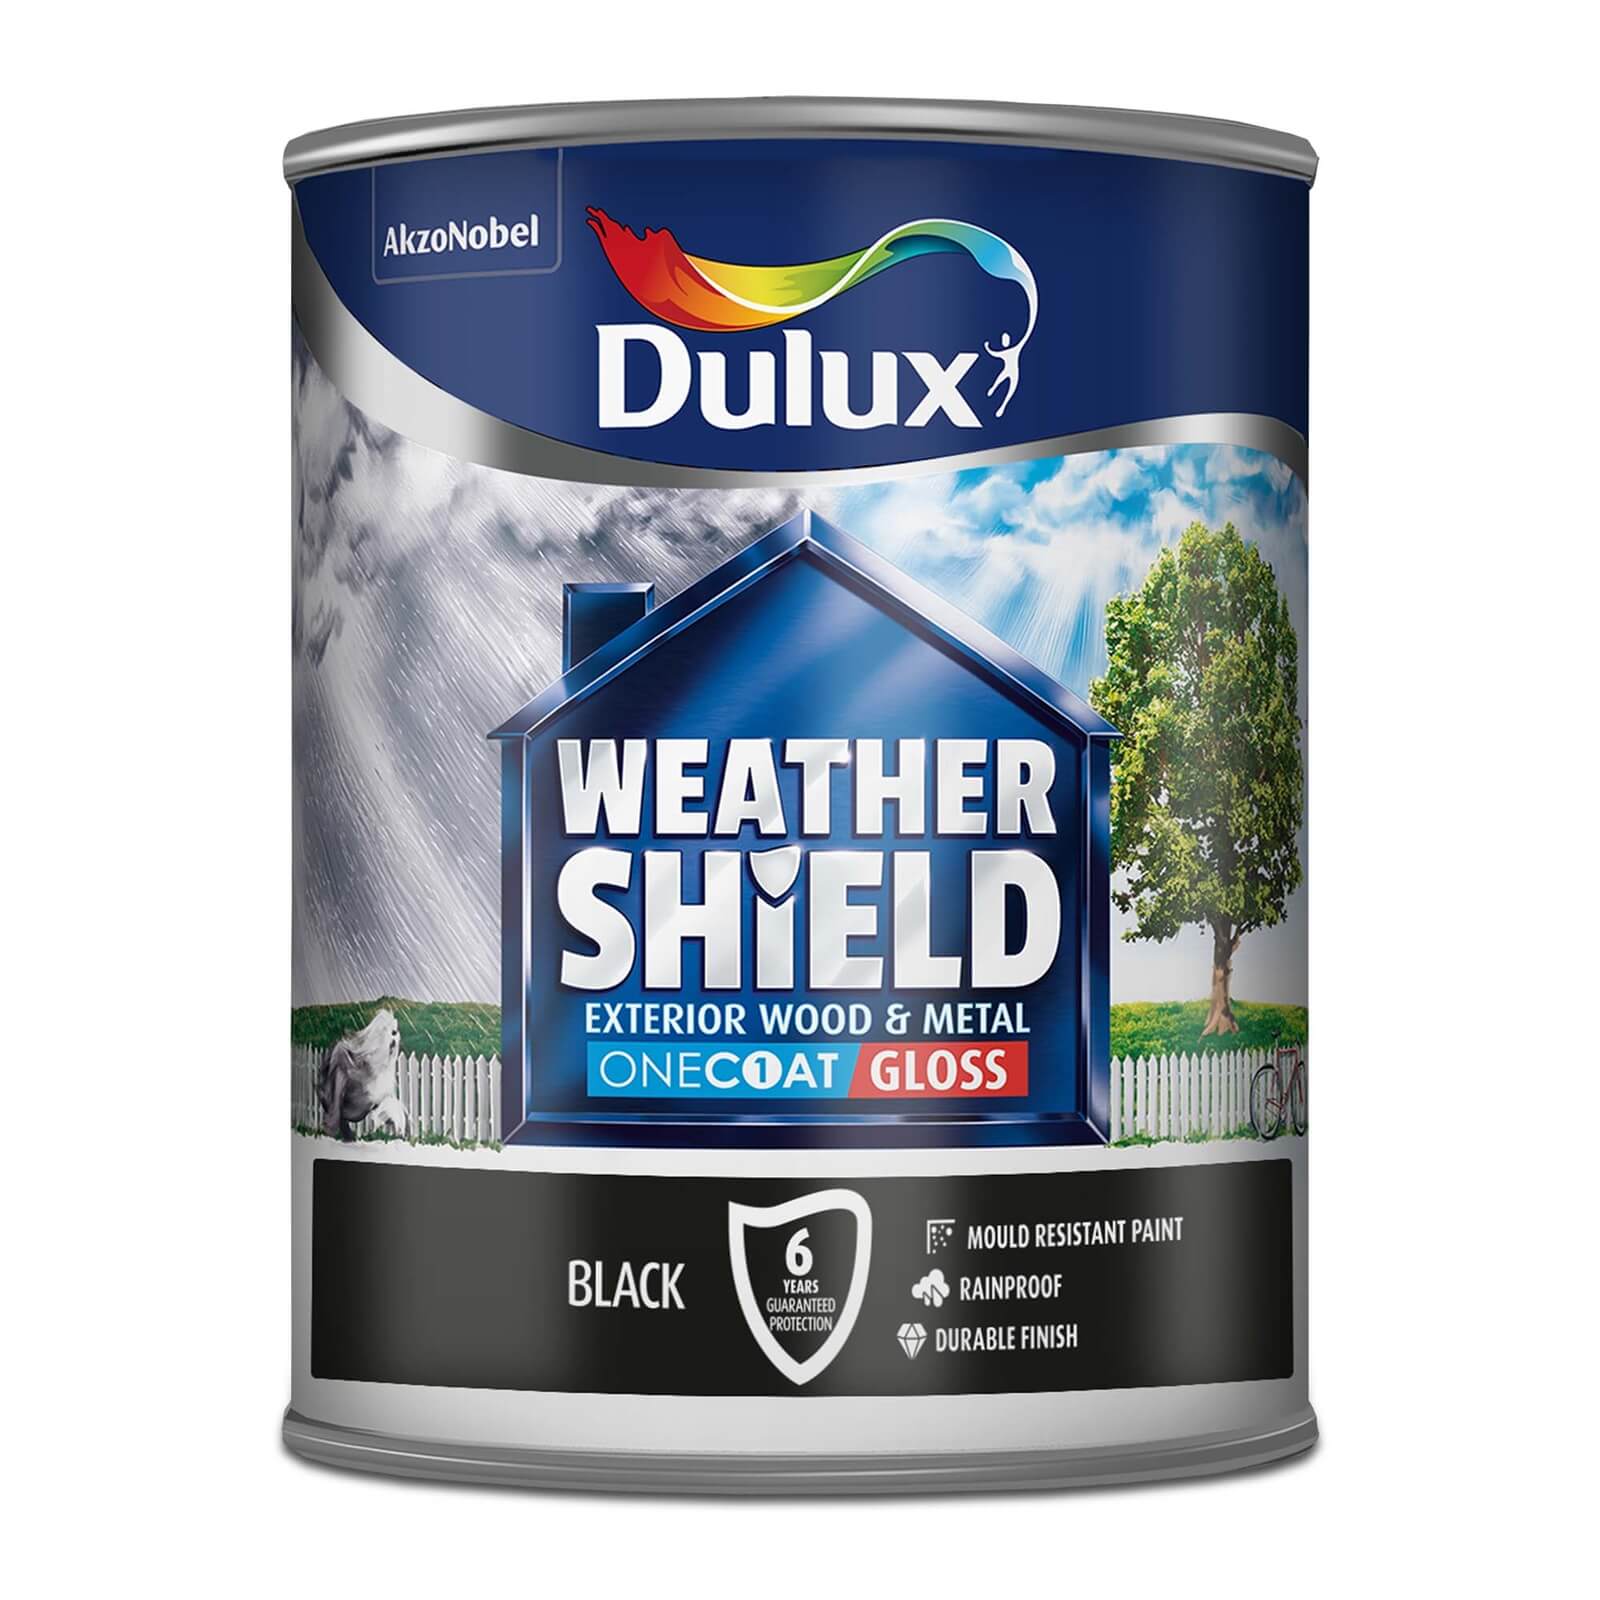 Dulux Weathershield Exterior One Coat Gloss Paint Black - 750ml